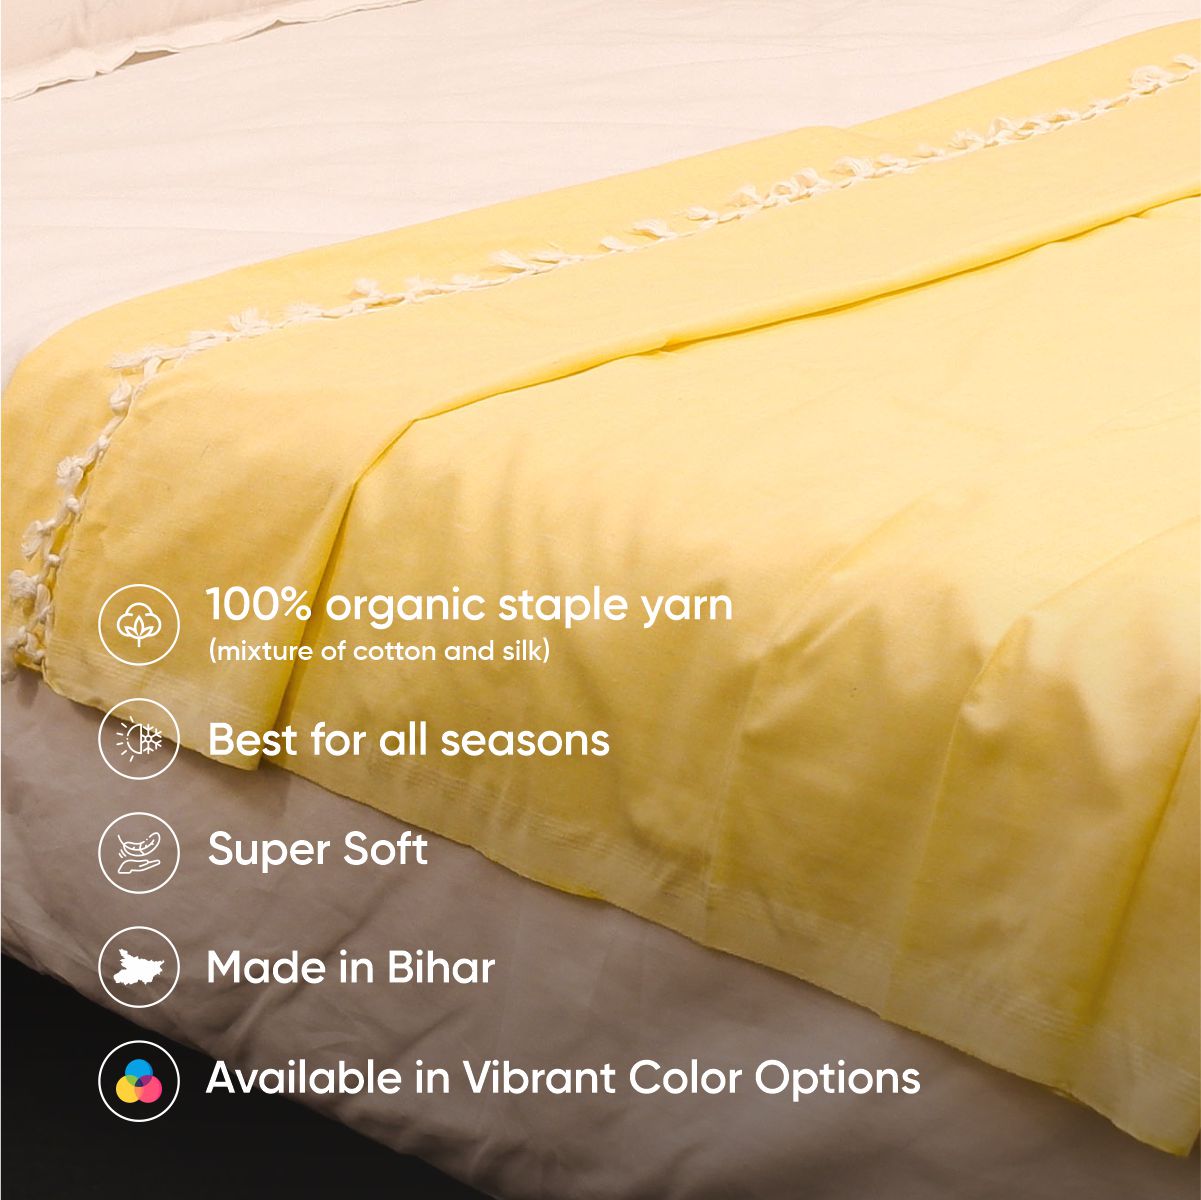 Combo Bhagalpuri Chadar (Pale Yellow, Blue & Pink) | AC Comforter (All Season) Skin Soft